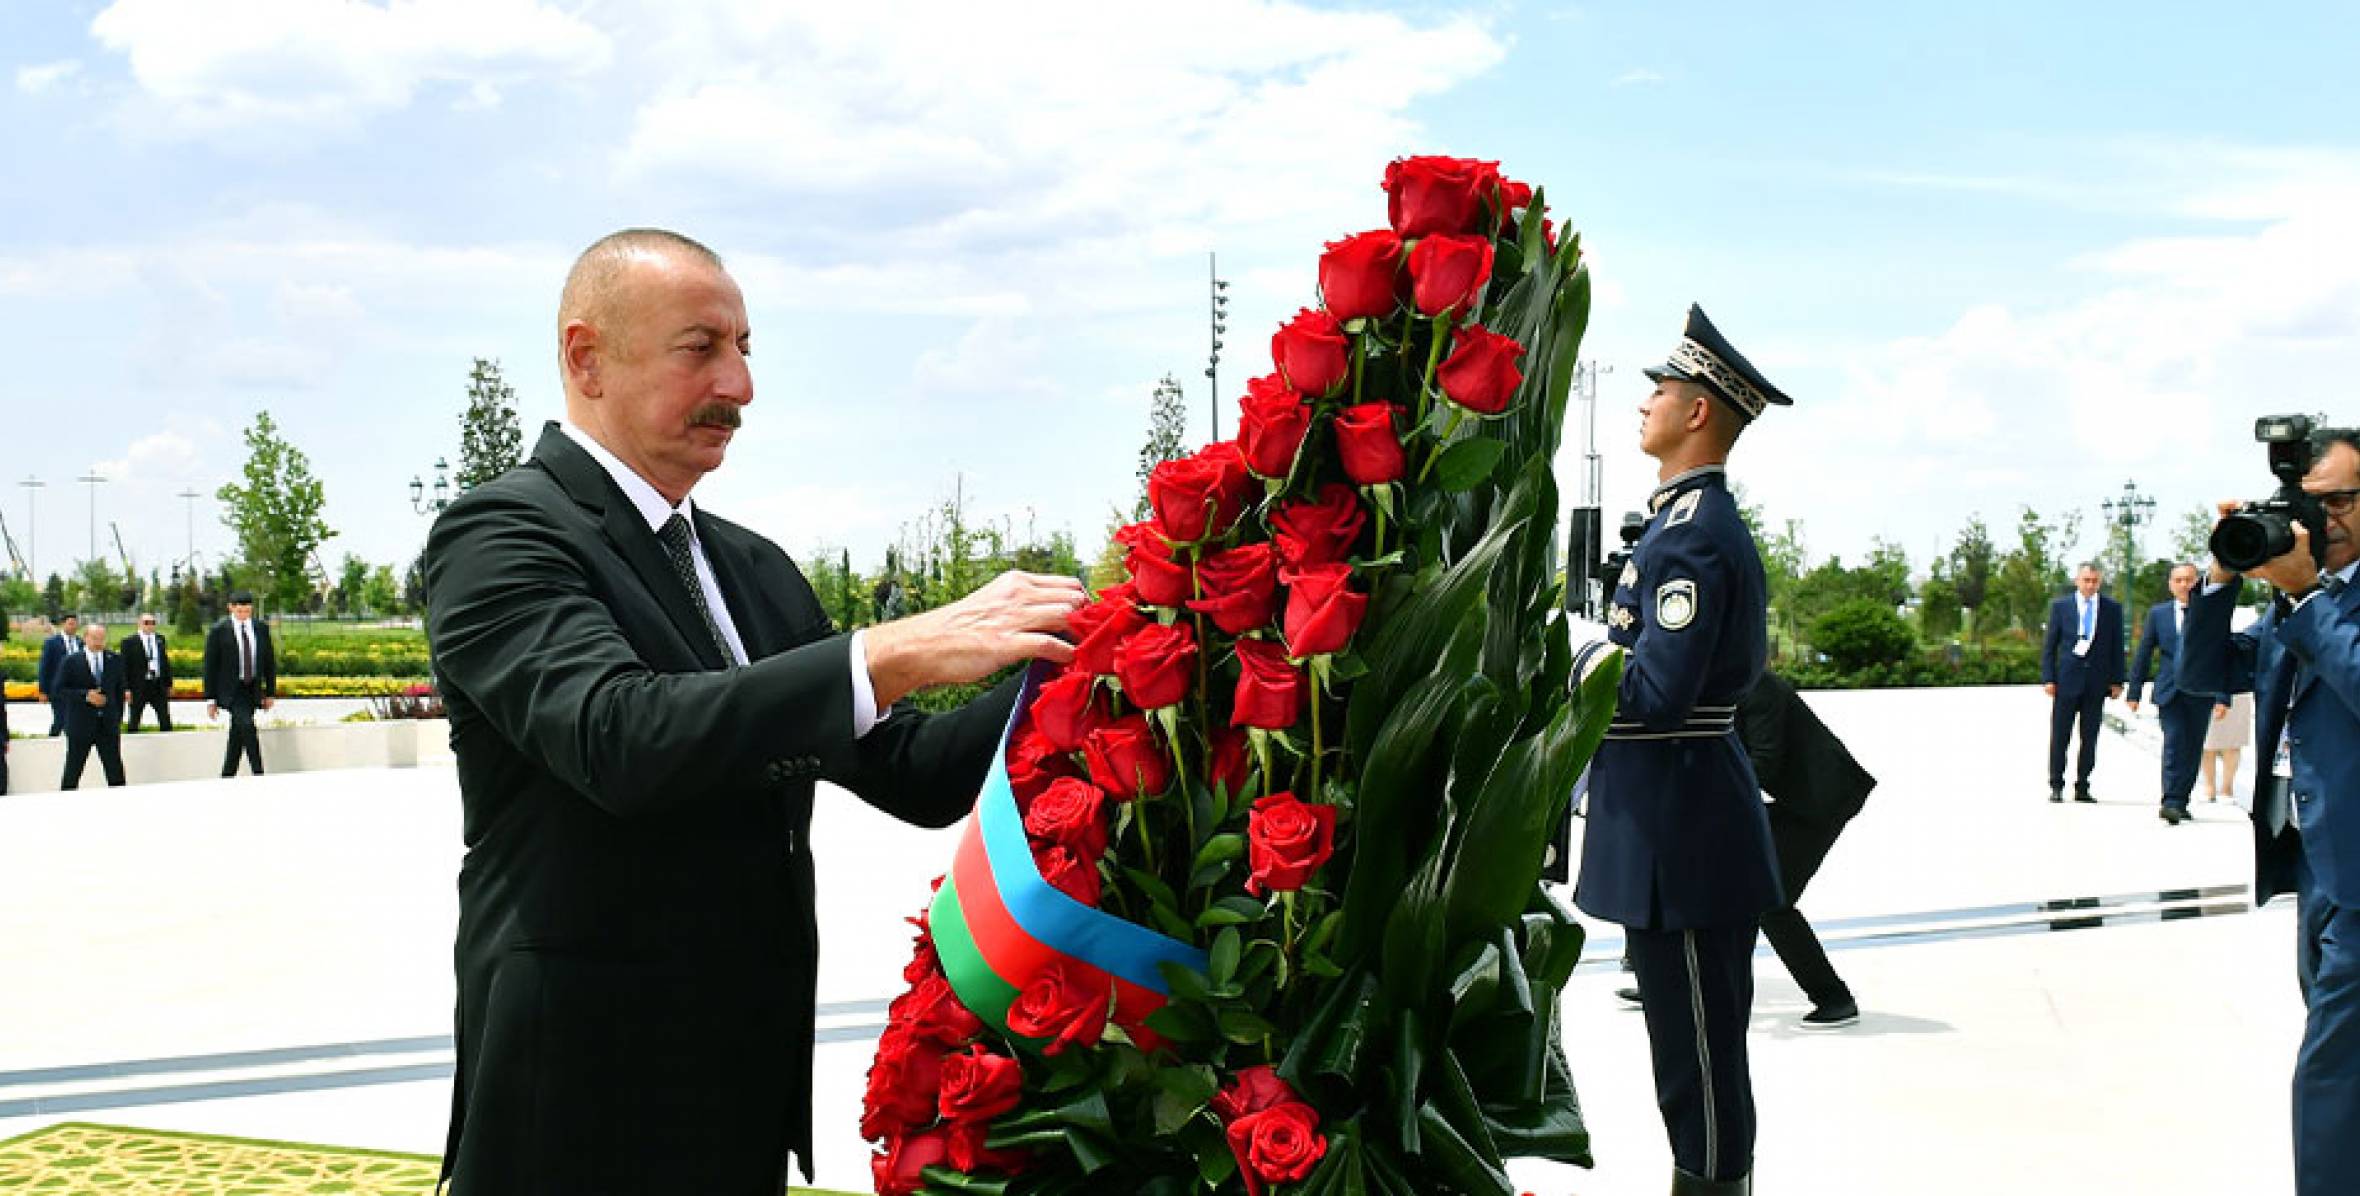 Ilham Aliyev visited Independence Monument in Tashkent